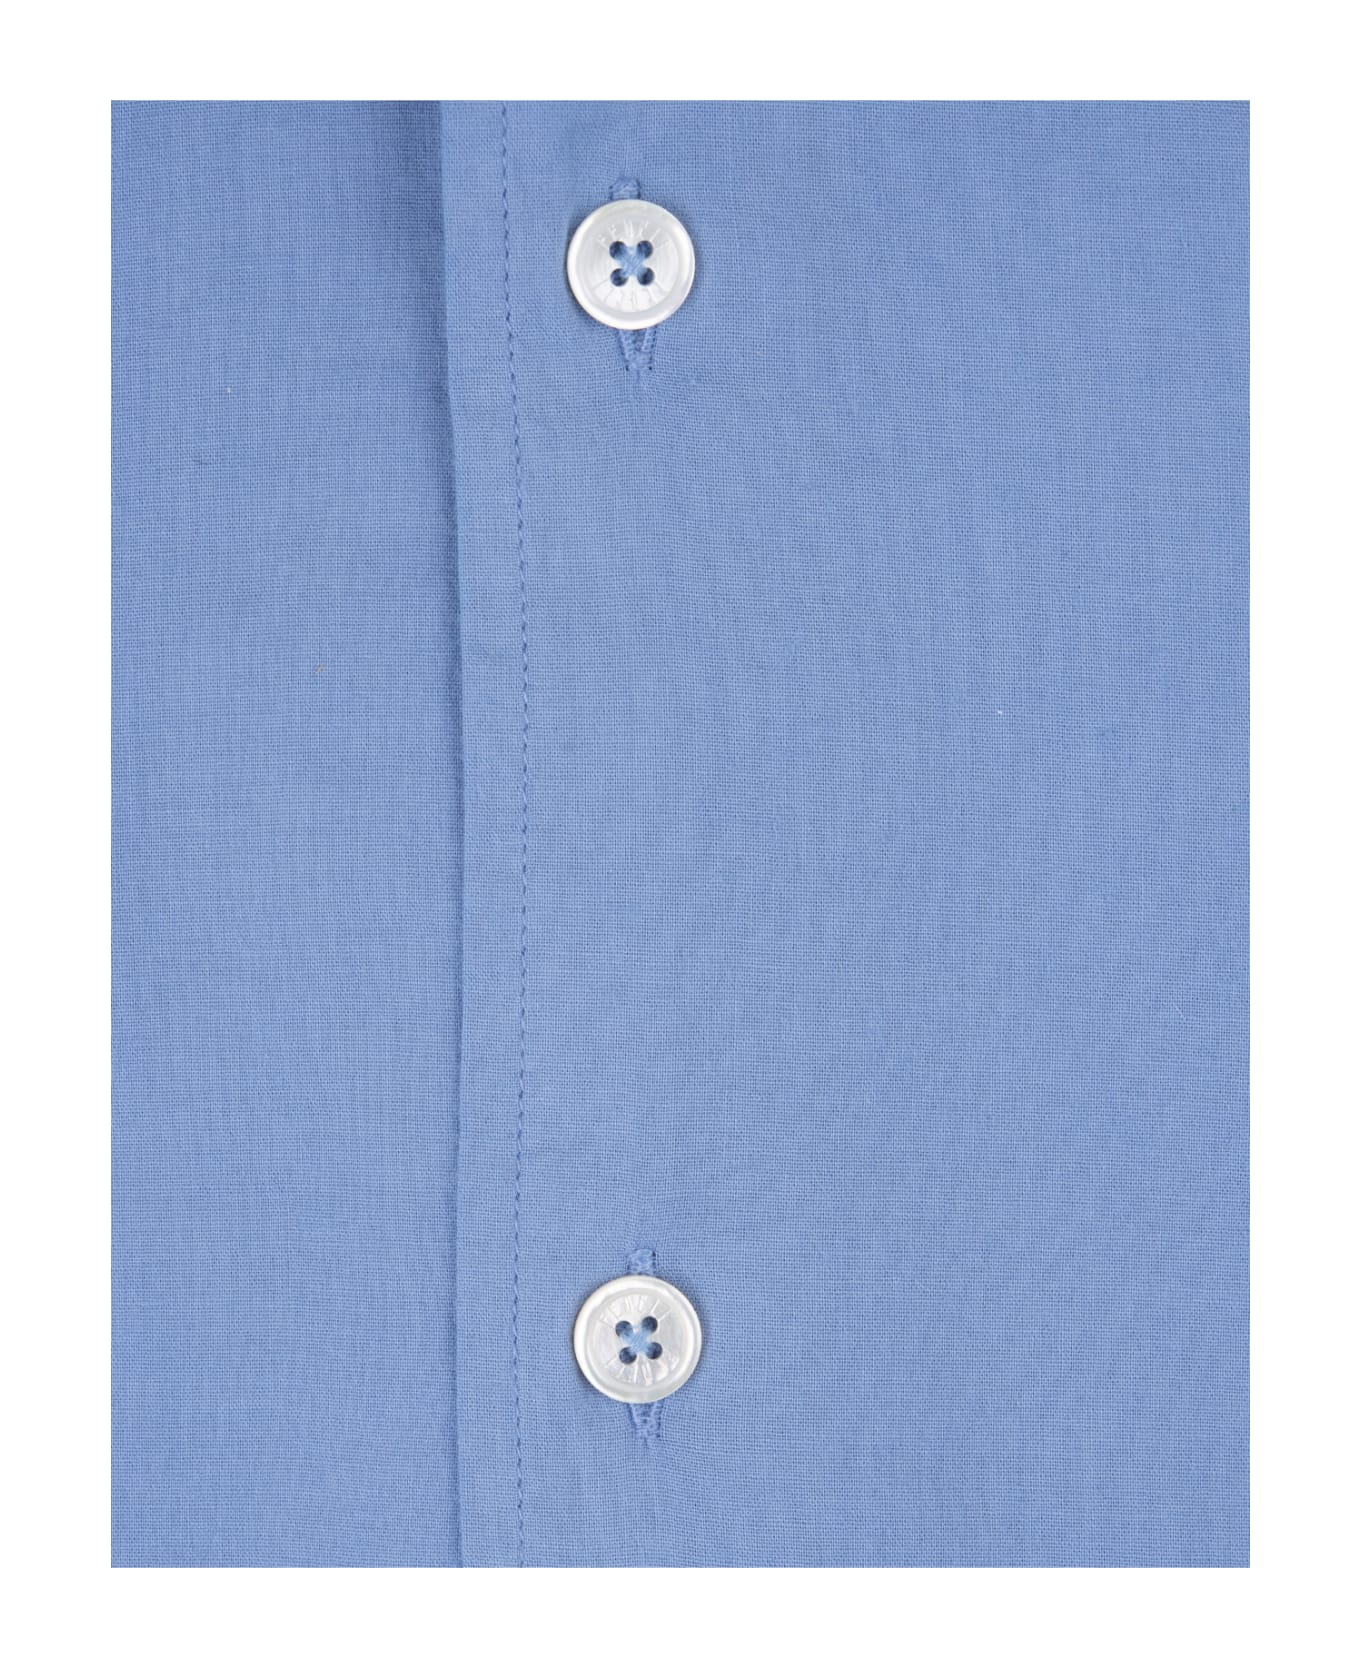 Fedeli Sean Shirt In Sky Blue Panamino - Blue シャツ